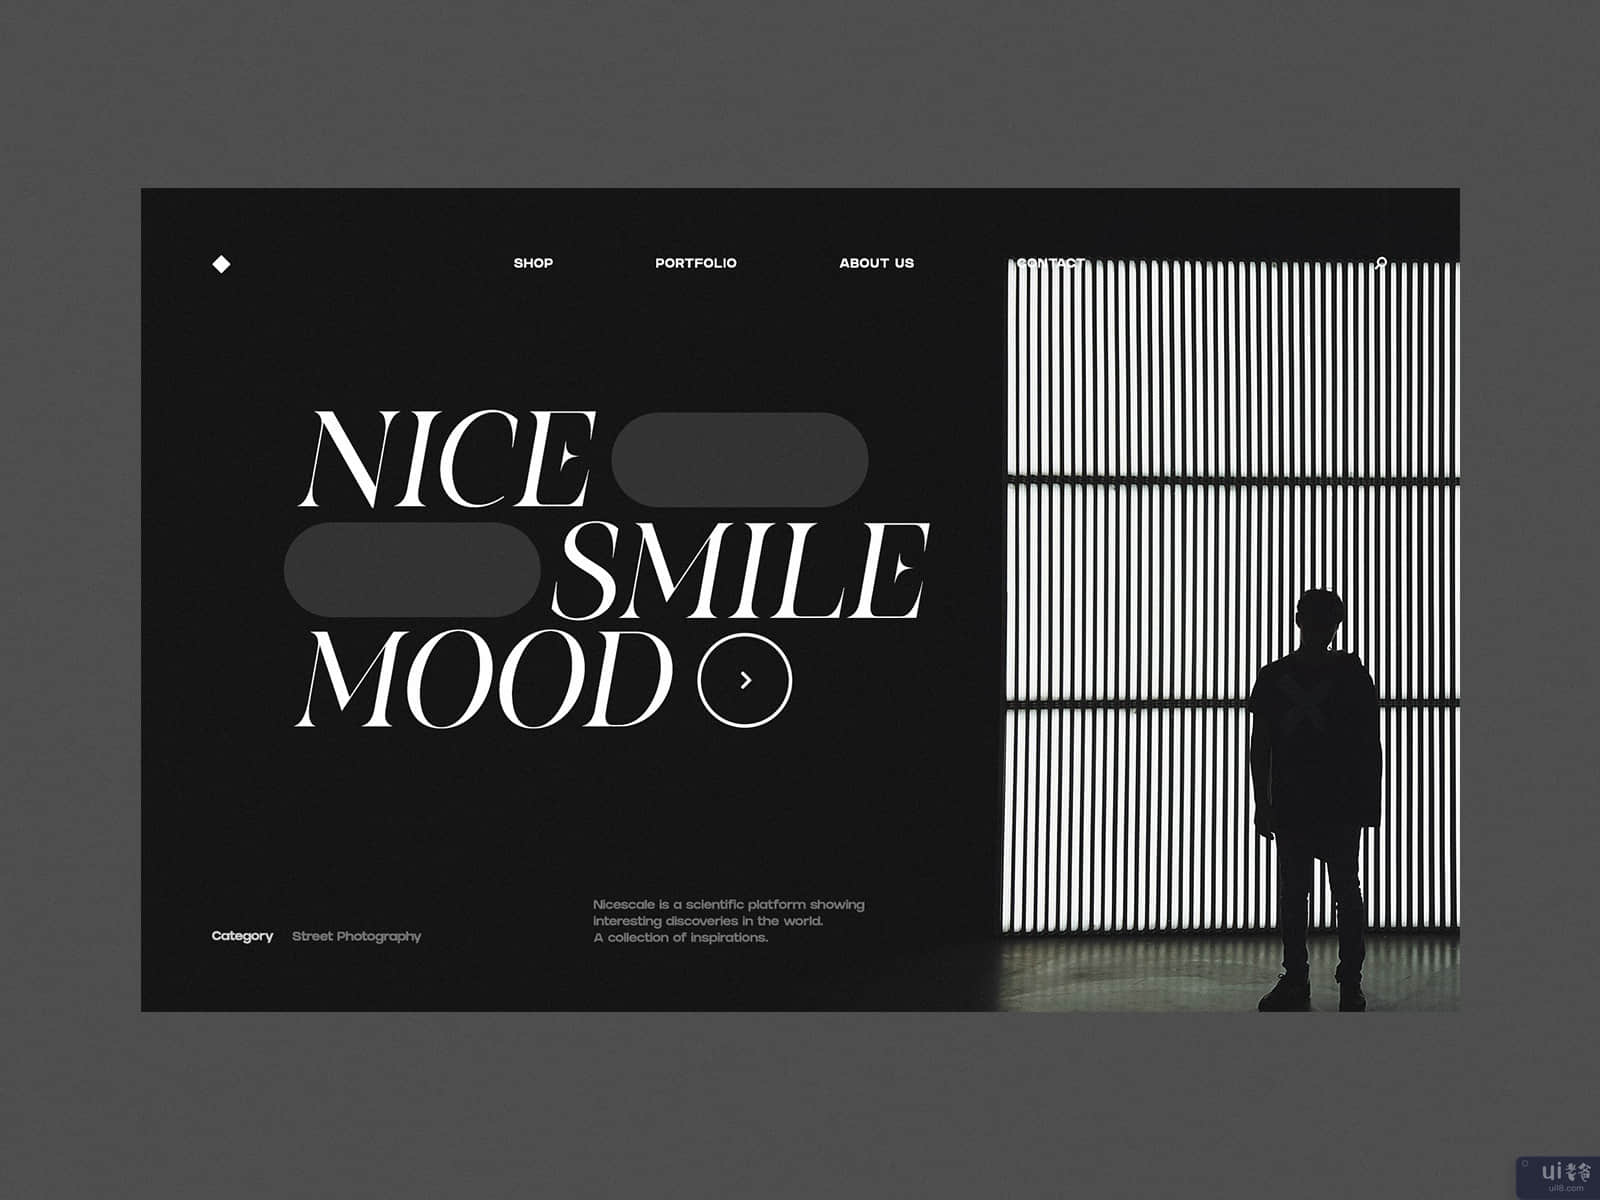 微笑_心情 - 网站概念(Smile_Mood - Website concept)插图